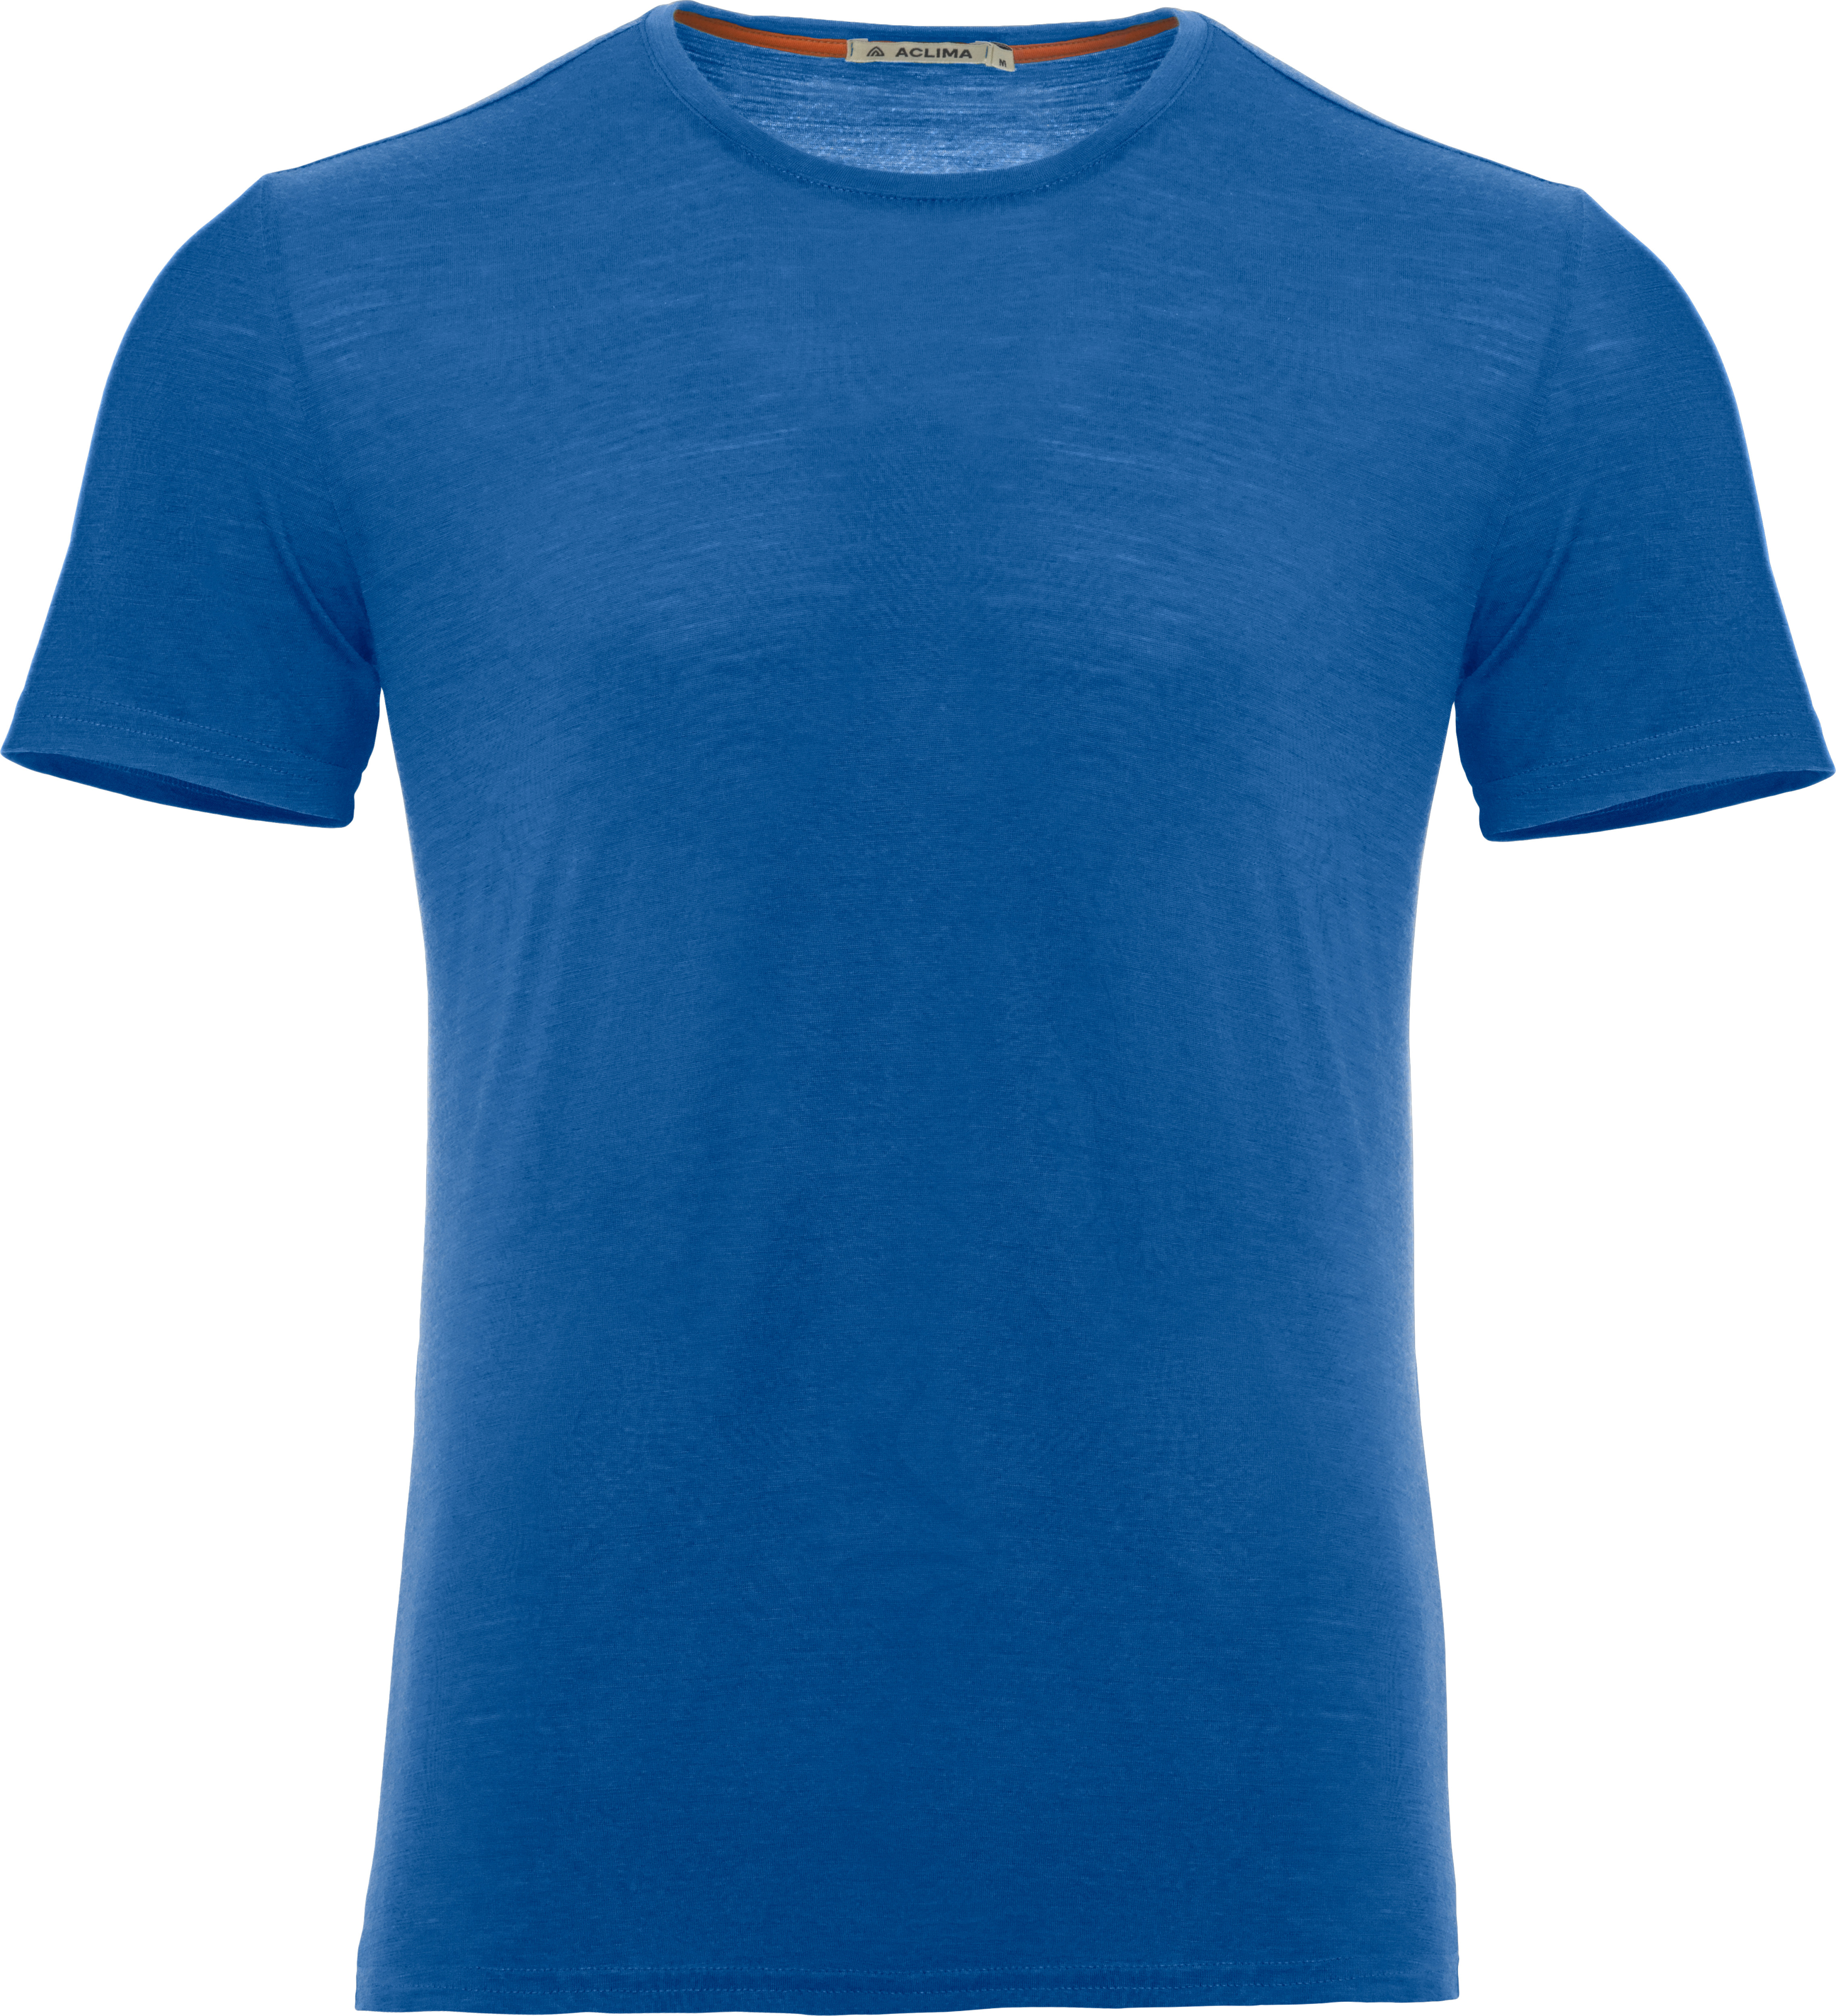 Men's LightWool T-shirt Round Neck Daphne